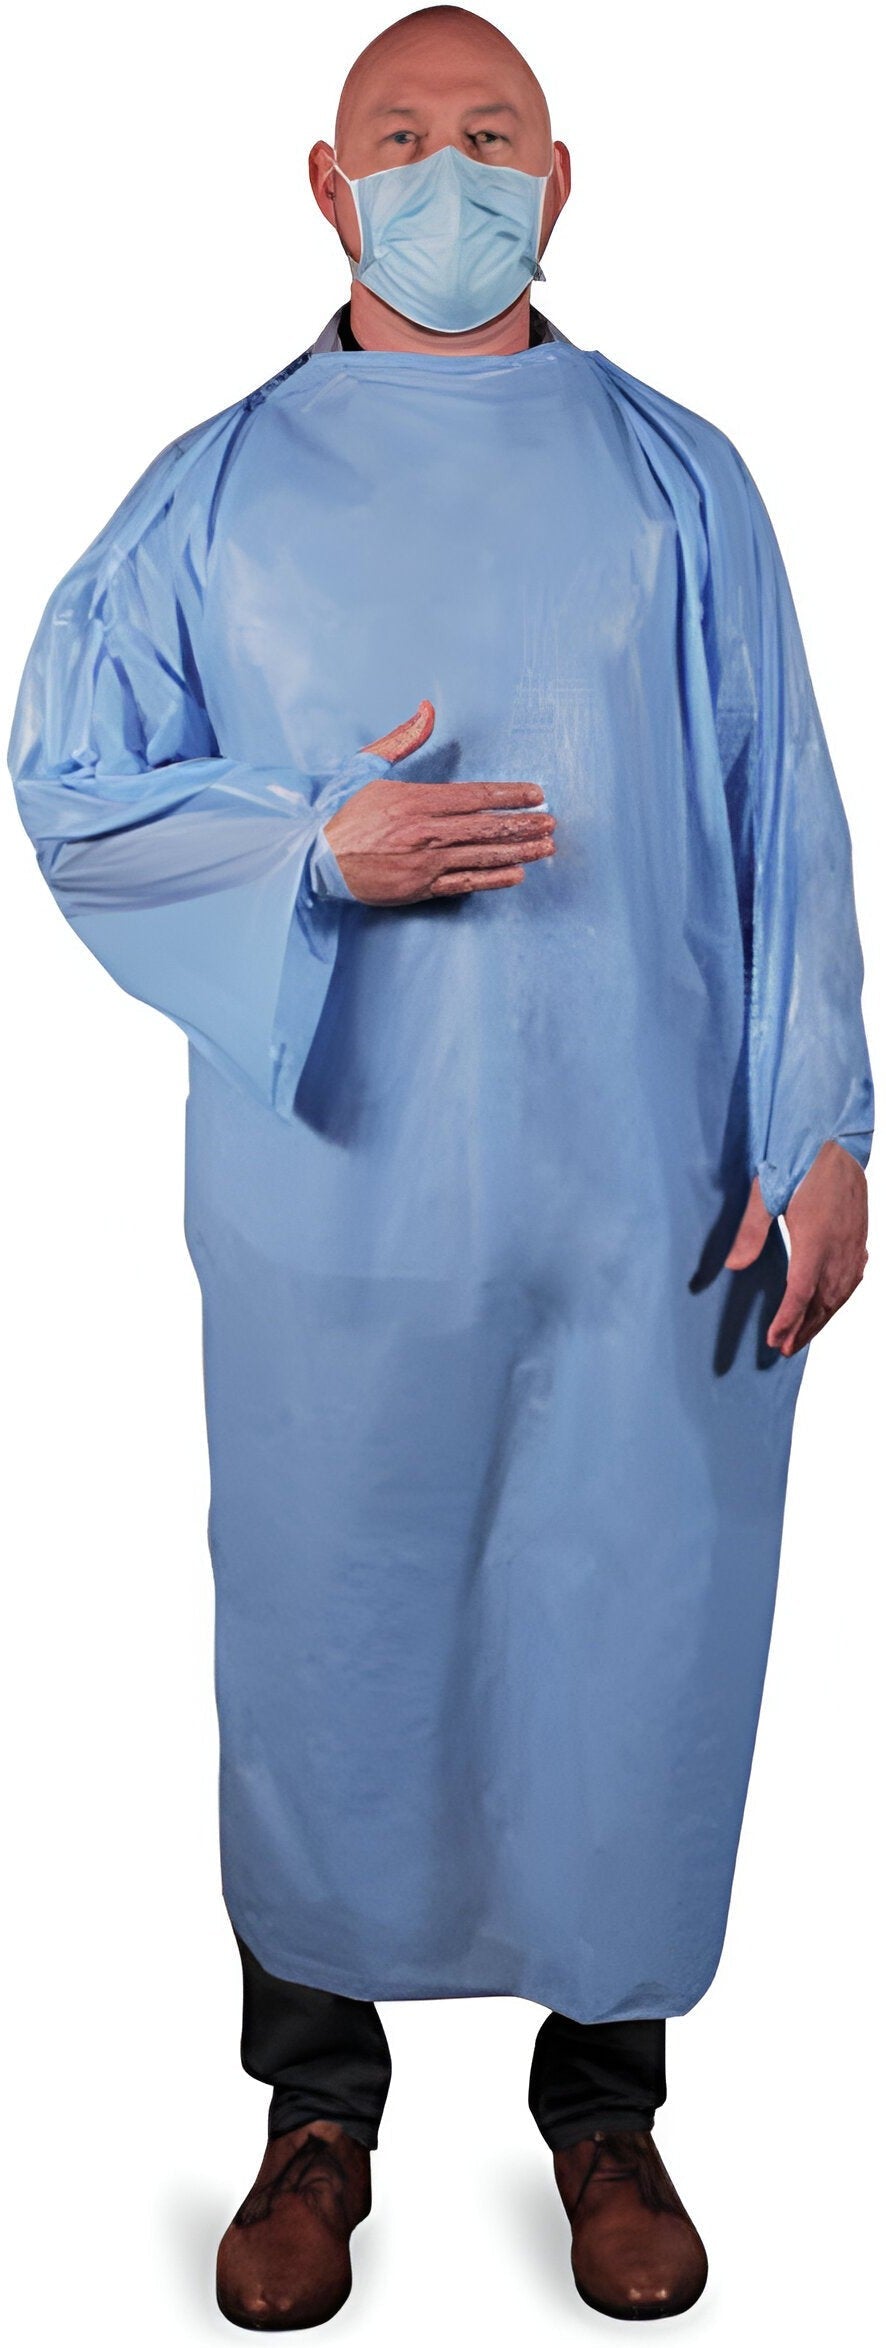 De Luxe - T Style Blue Isolation Gowns, 50/Cs - 511024